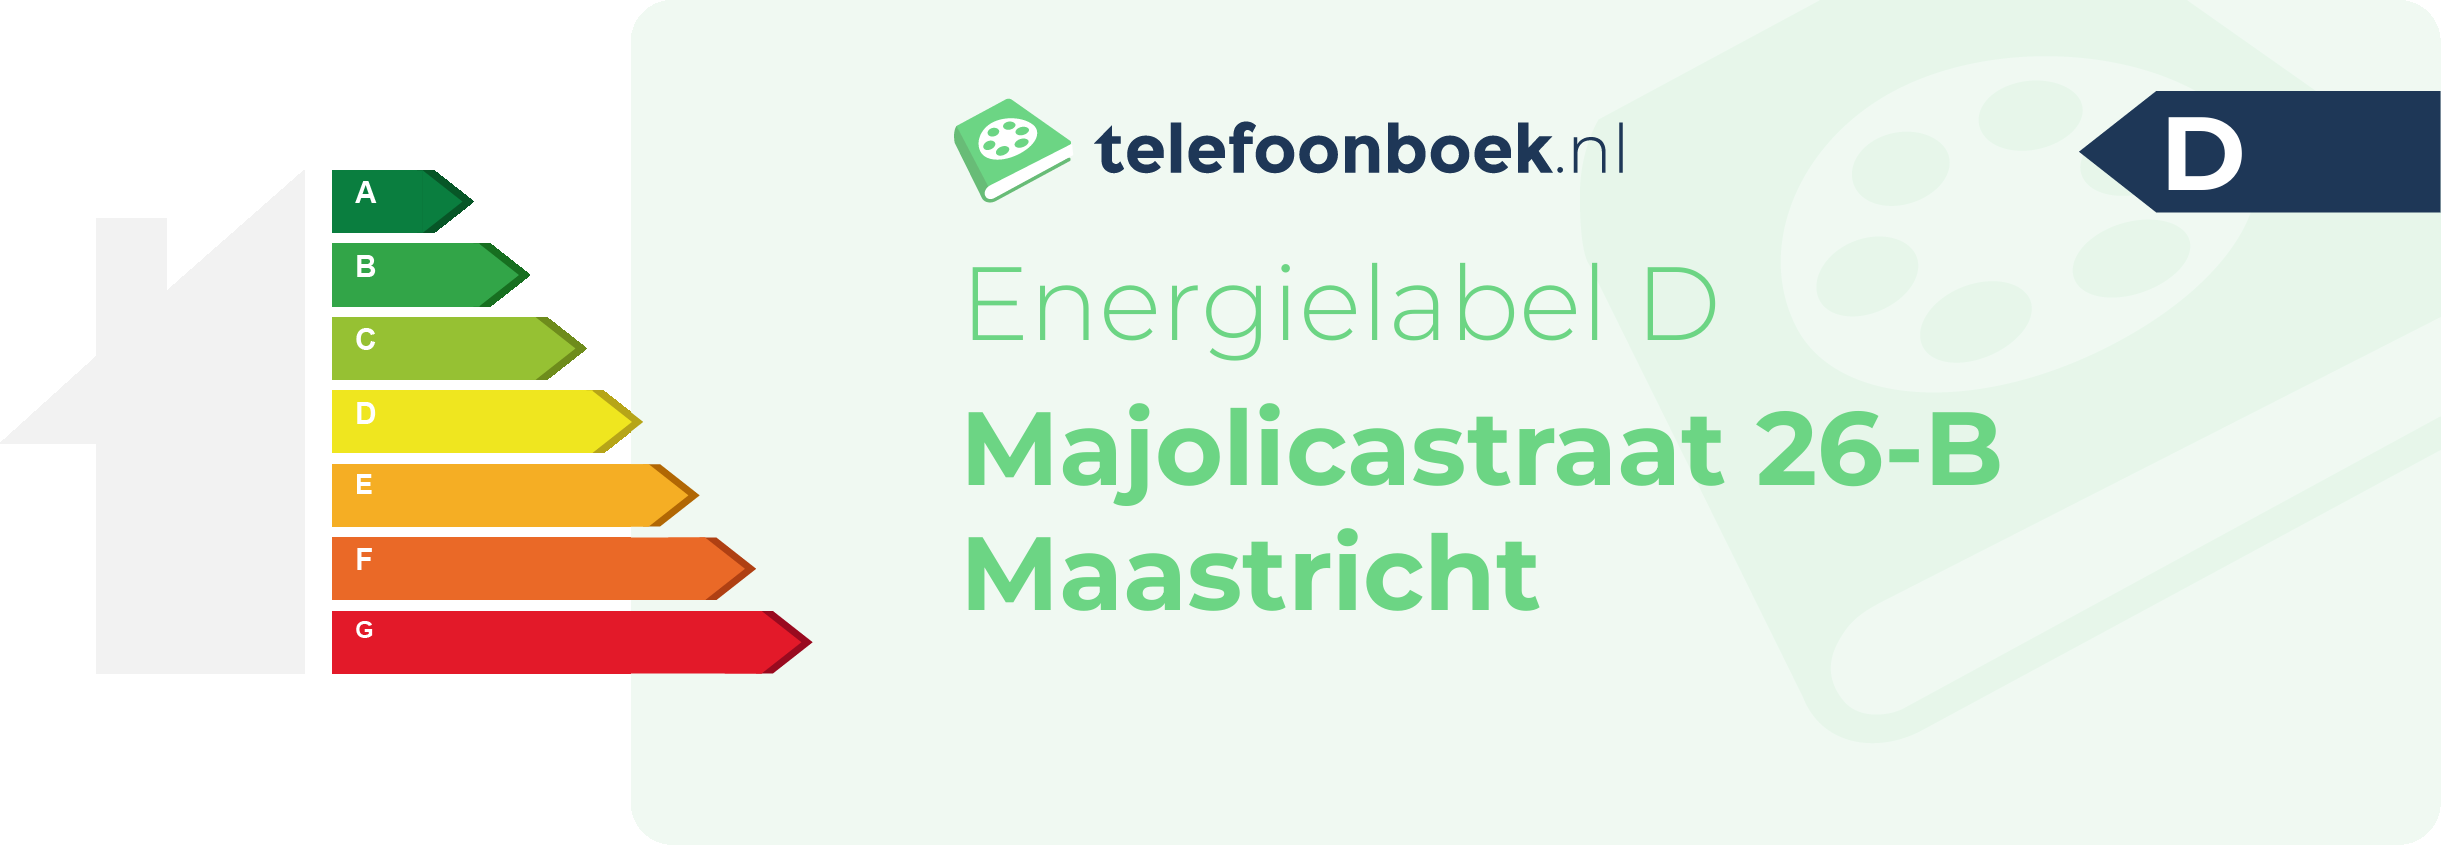 Energielabel Majolicastraat 26-B Maastricht